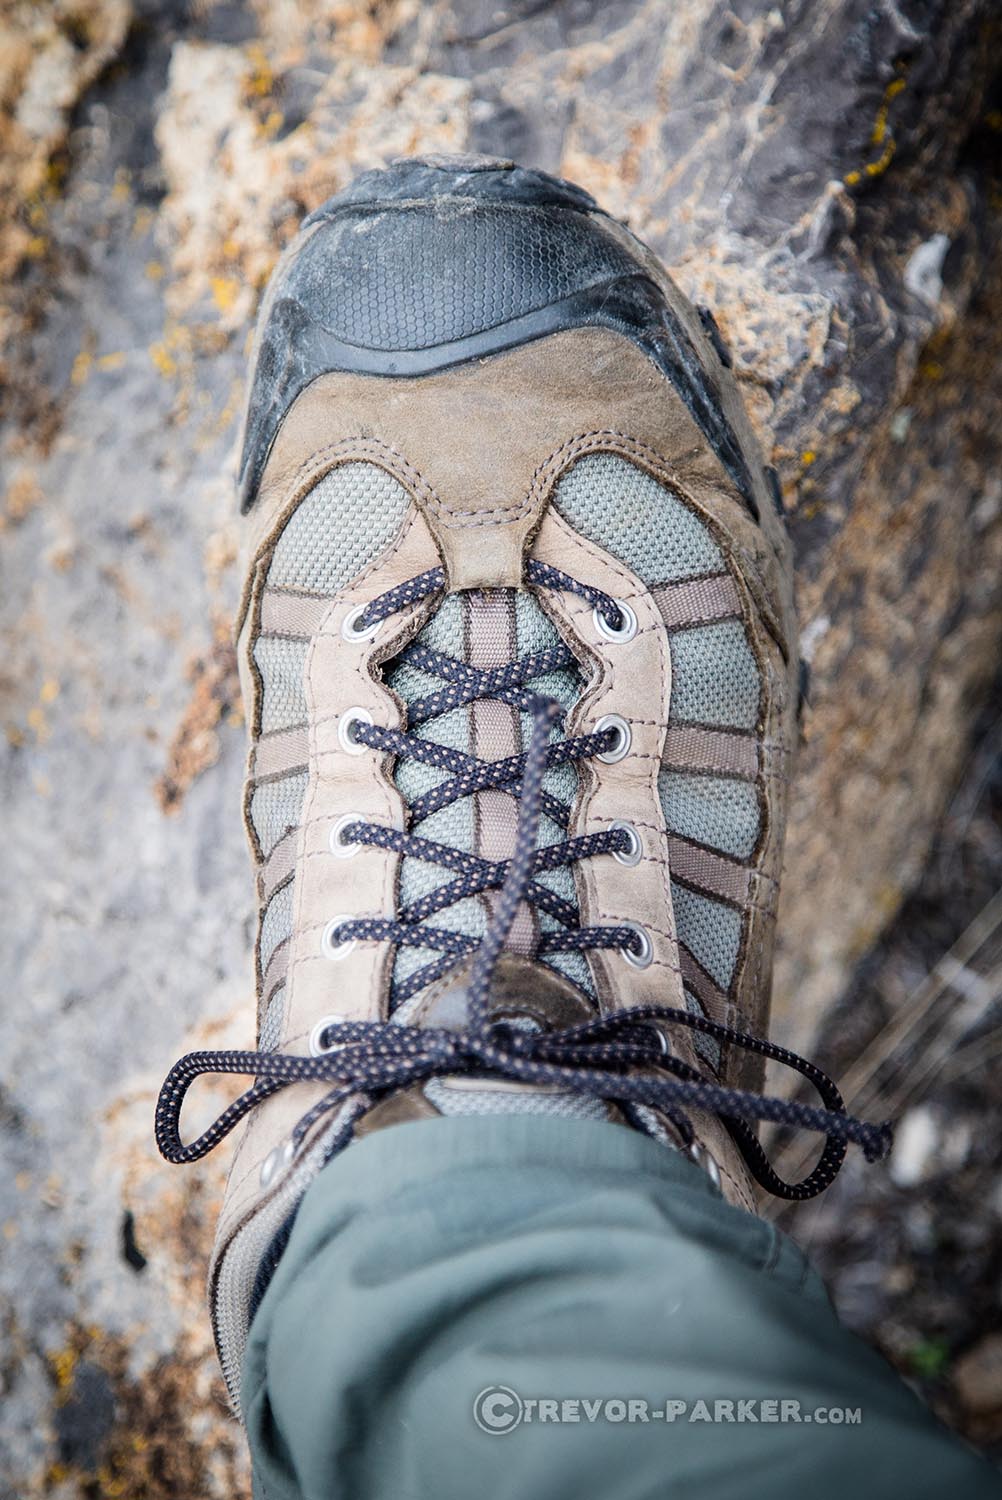 oboz tamarack low bdry hiking shoes